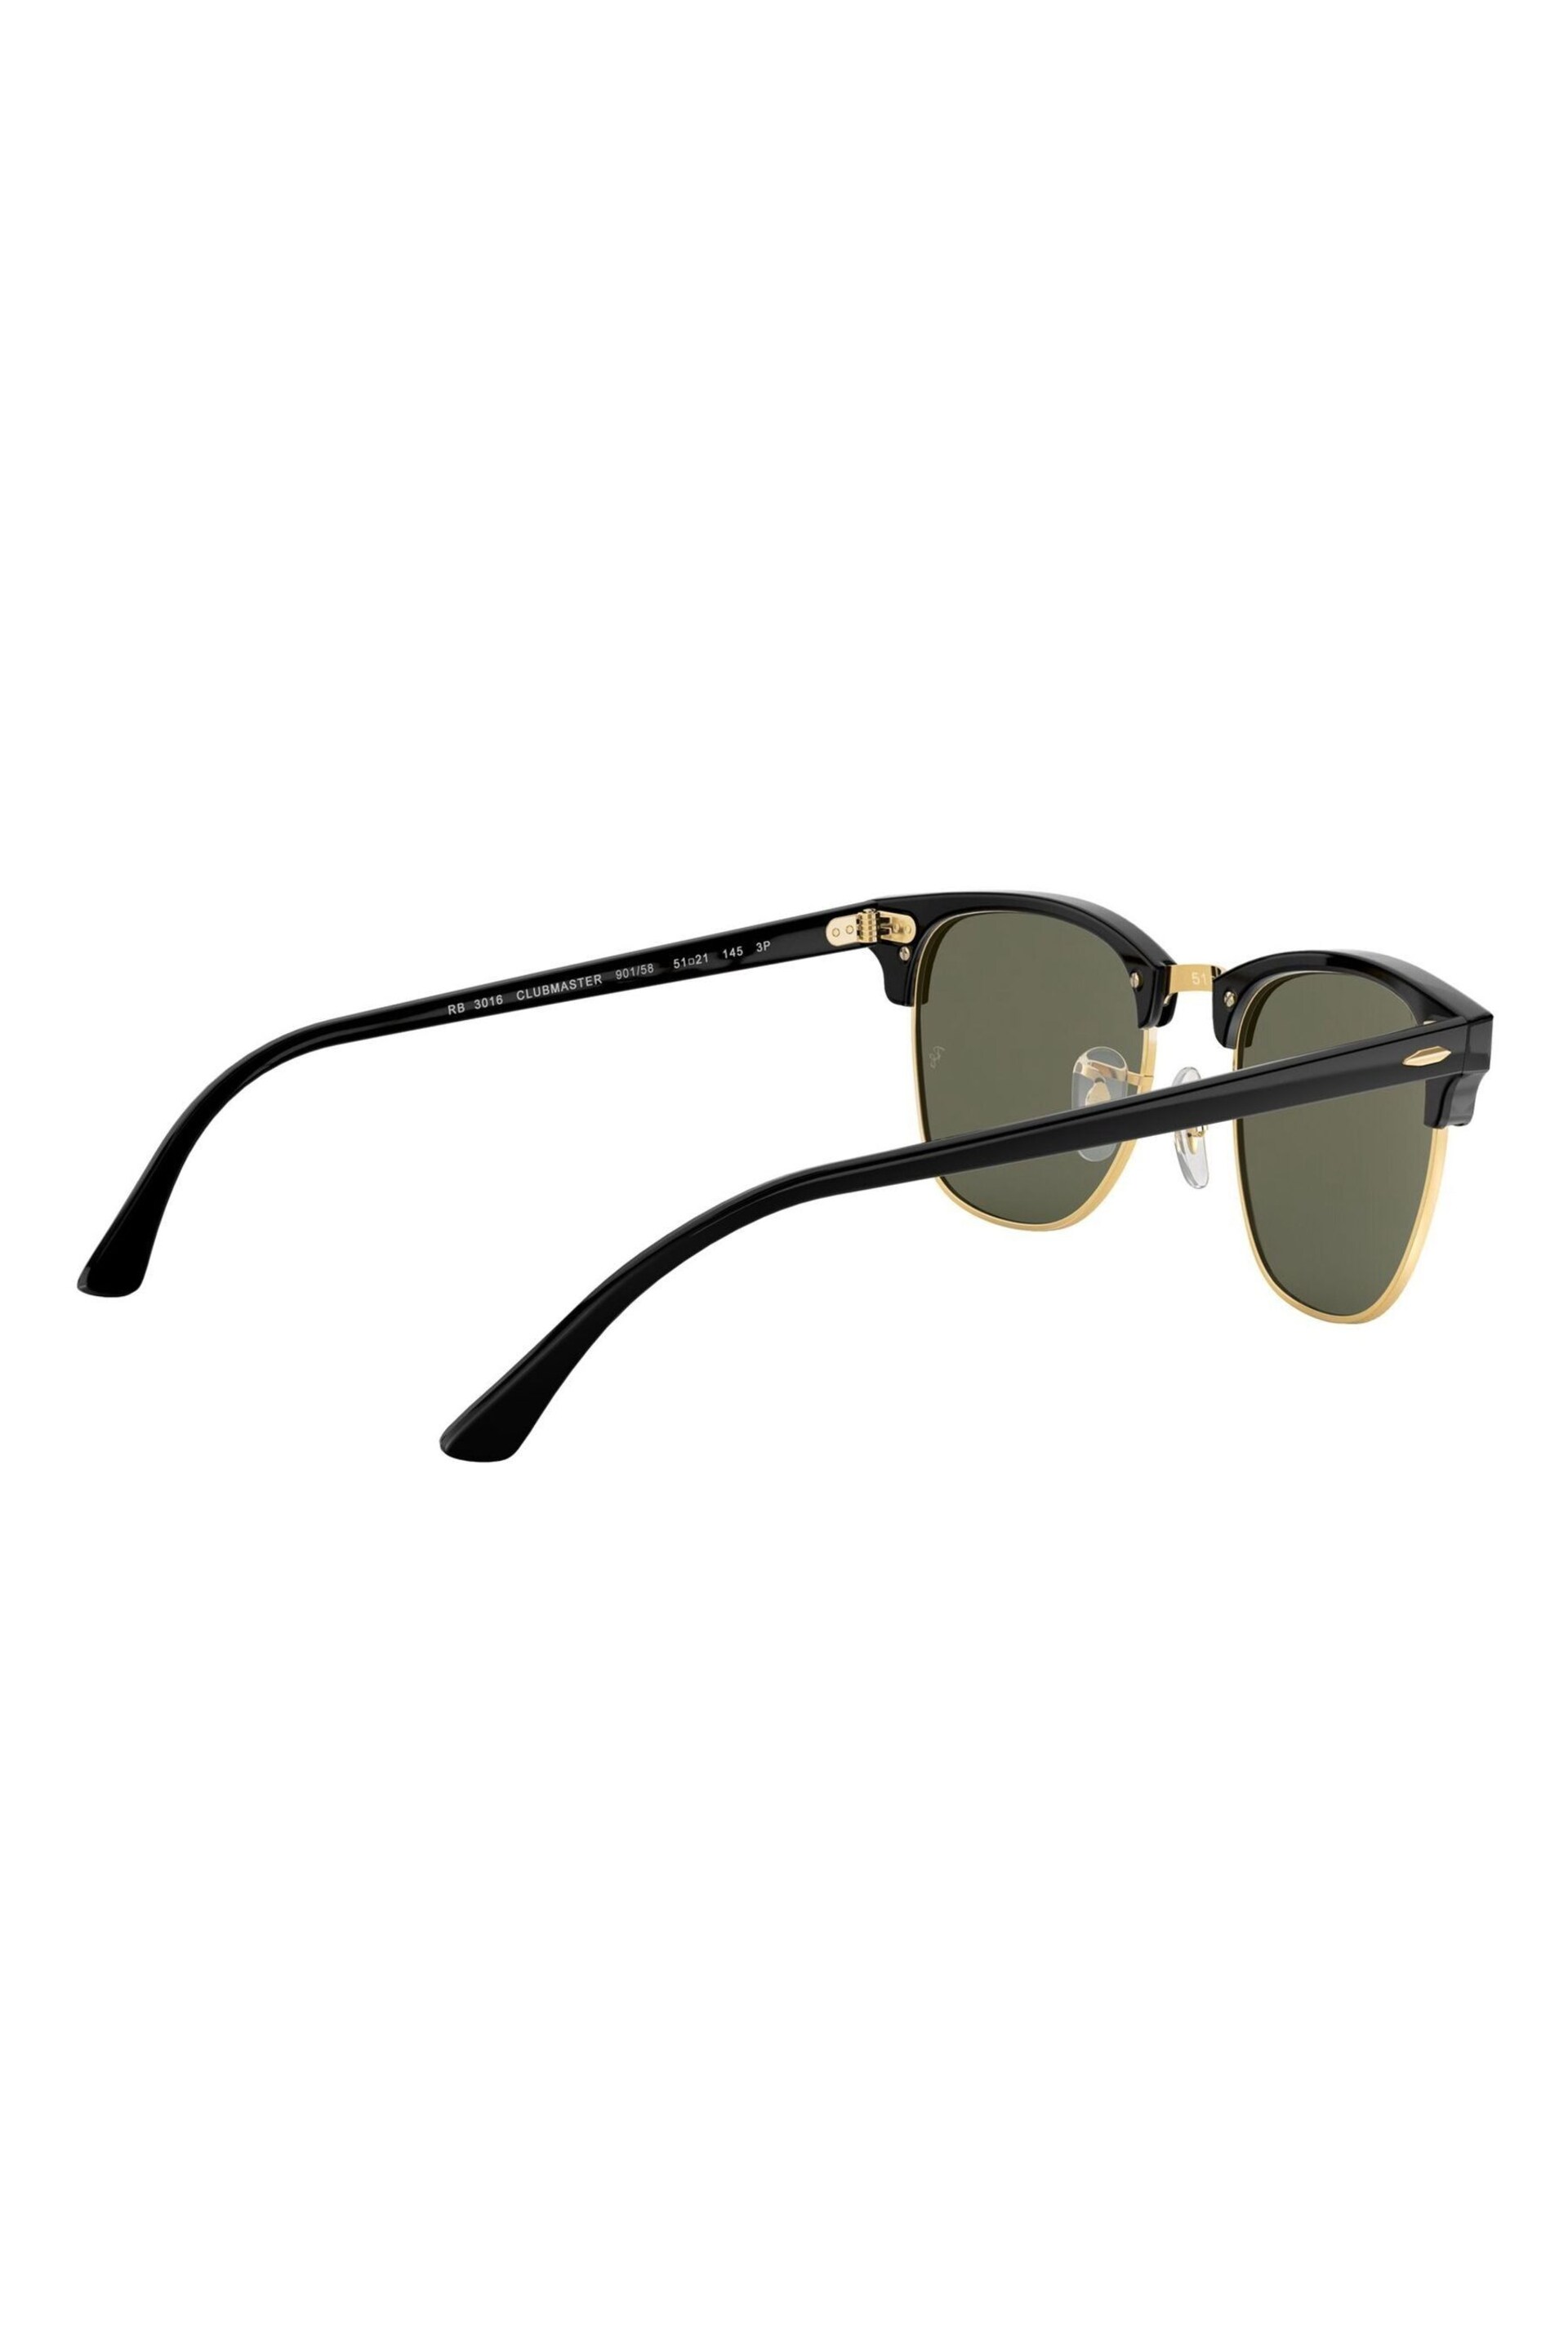 Ray-Ban Polarised Clubmaster Sunglasses - Image 9 of 12